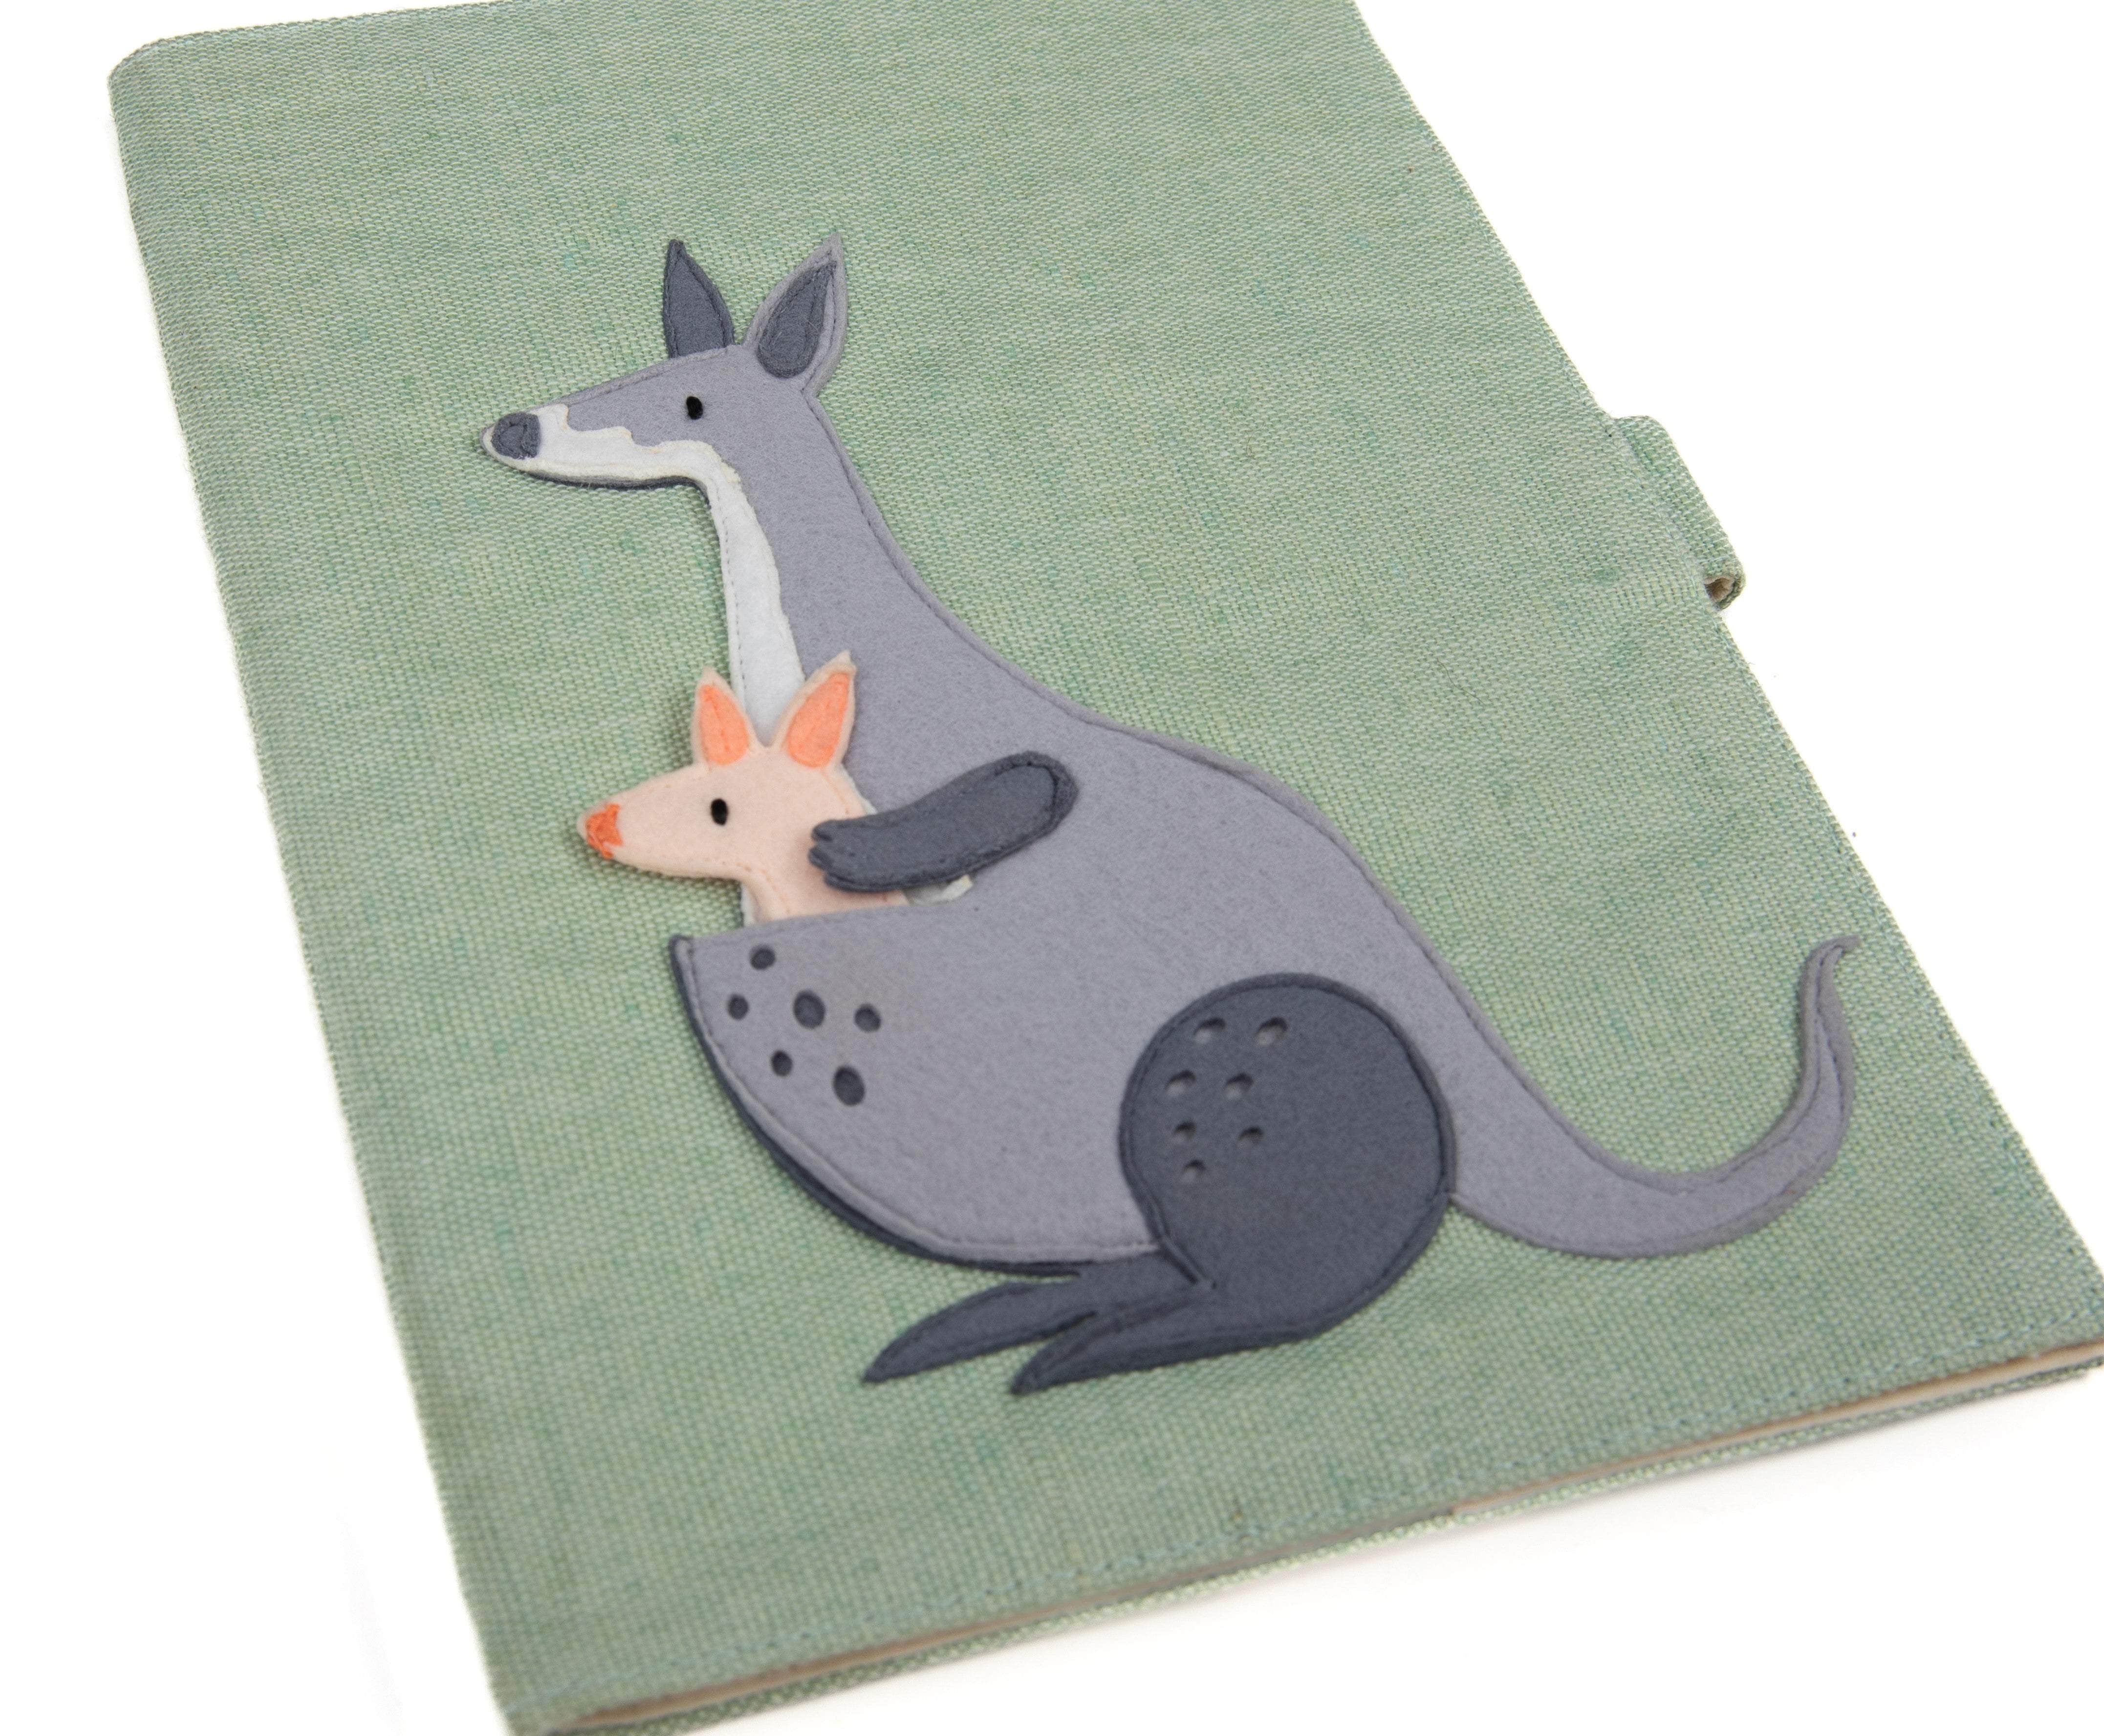 U-booklet cover kangaroo